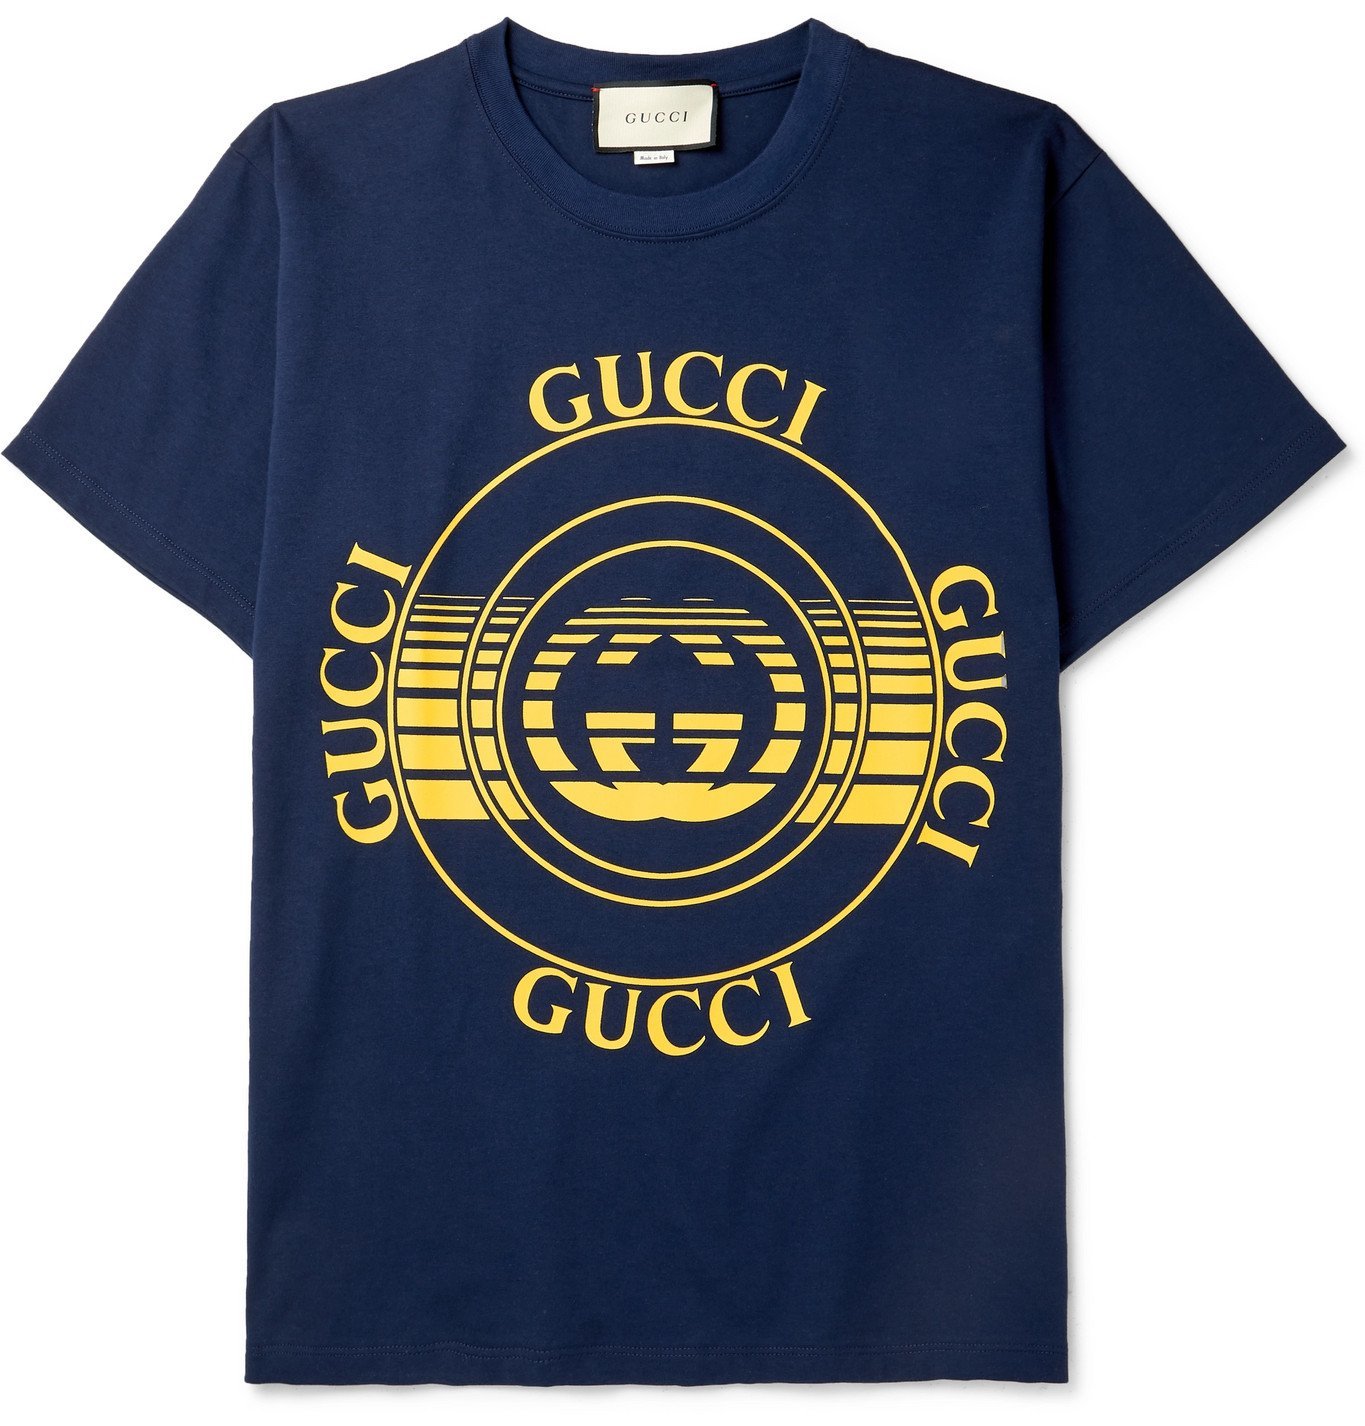 Gucci - Printed Cotton-Jersey T-Shirt - Blue Gucci